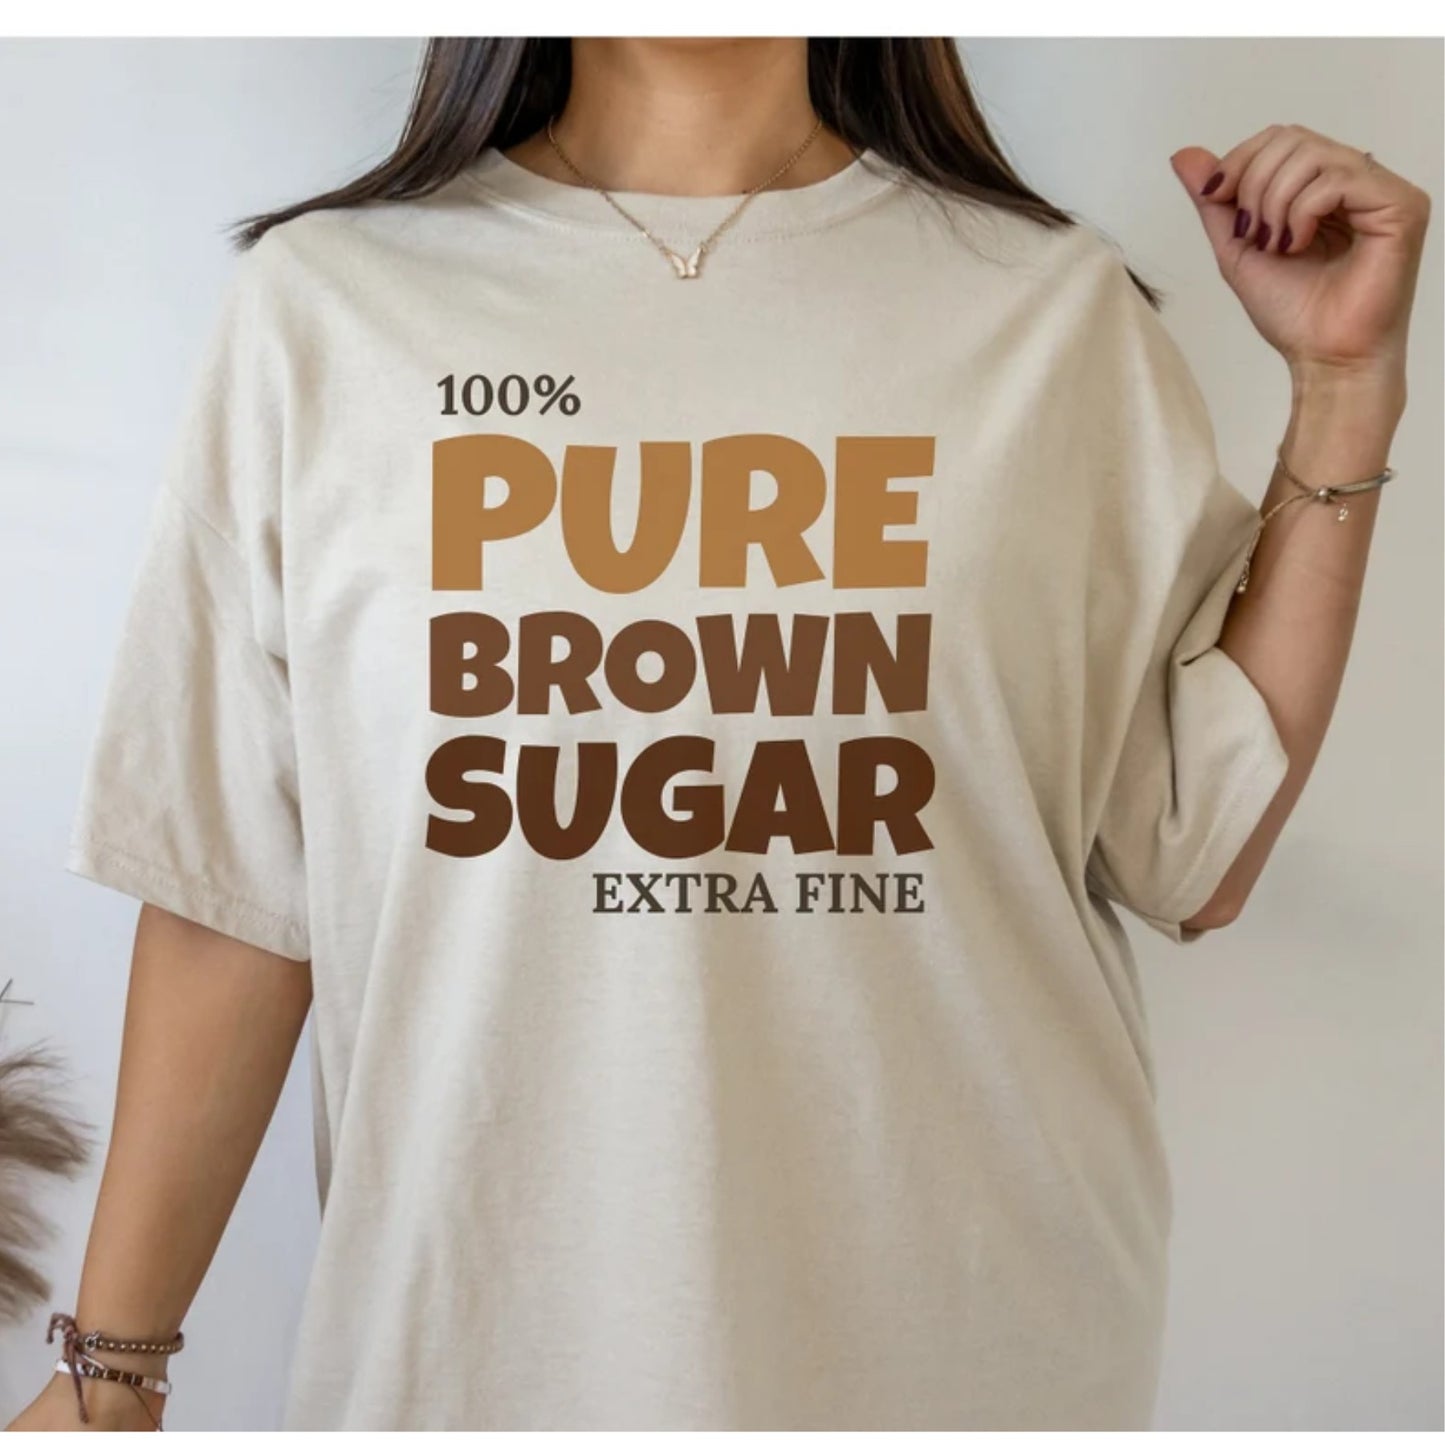 100% Pure Brown Sugar Womens Tan/Sand Colored Hoodie/Tee